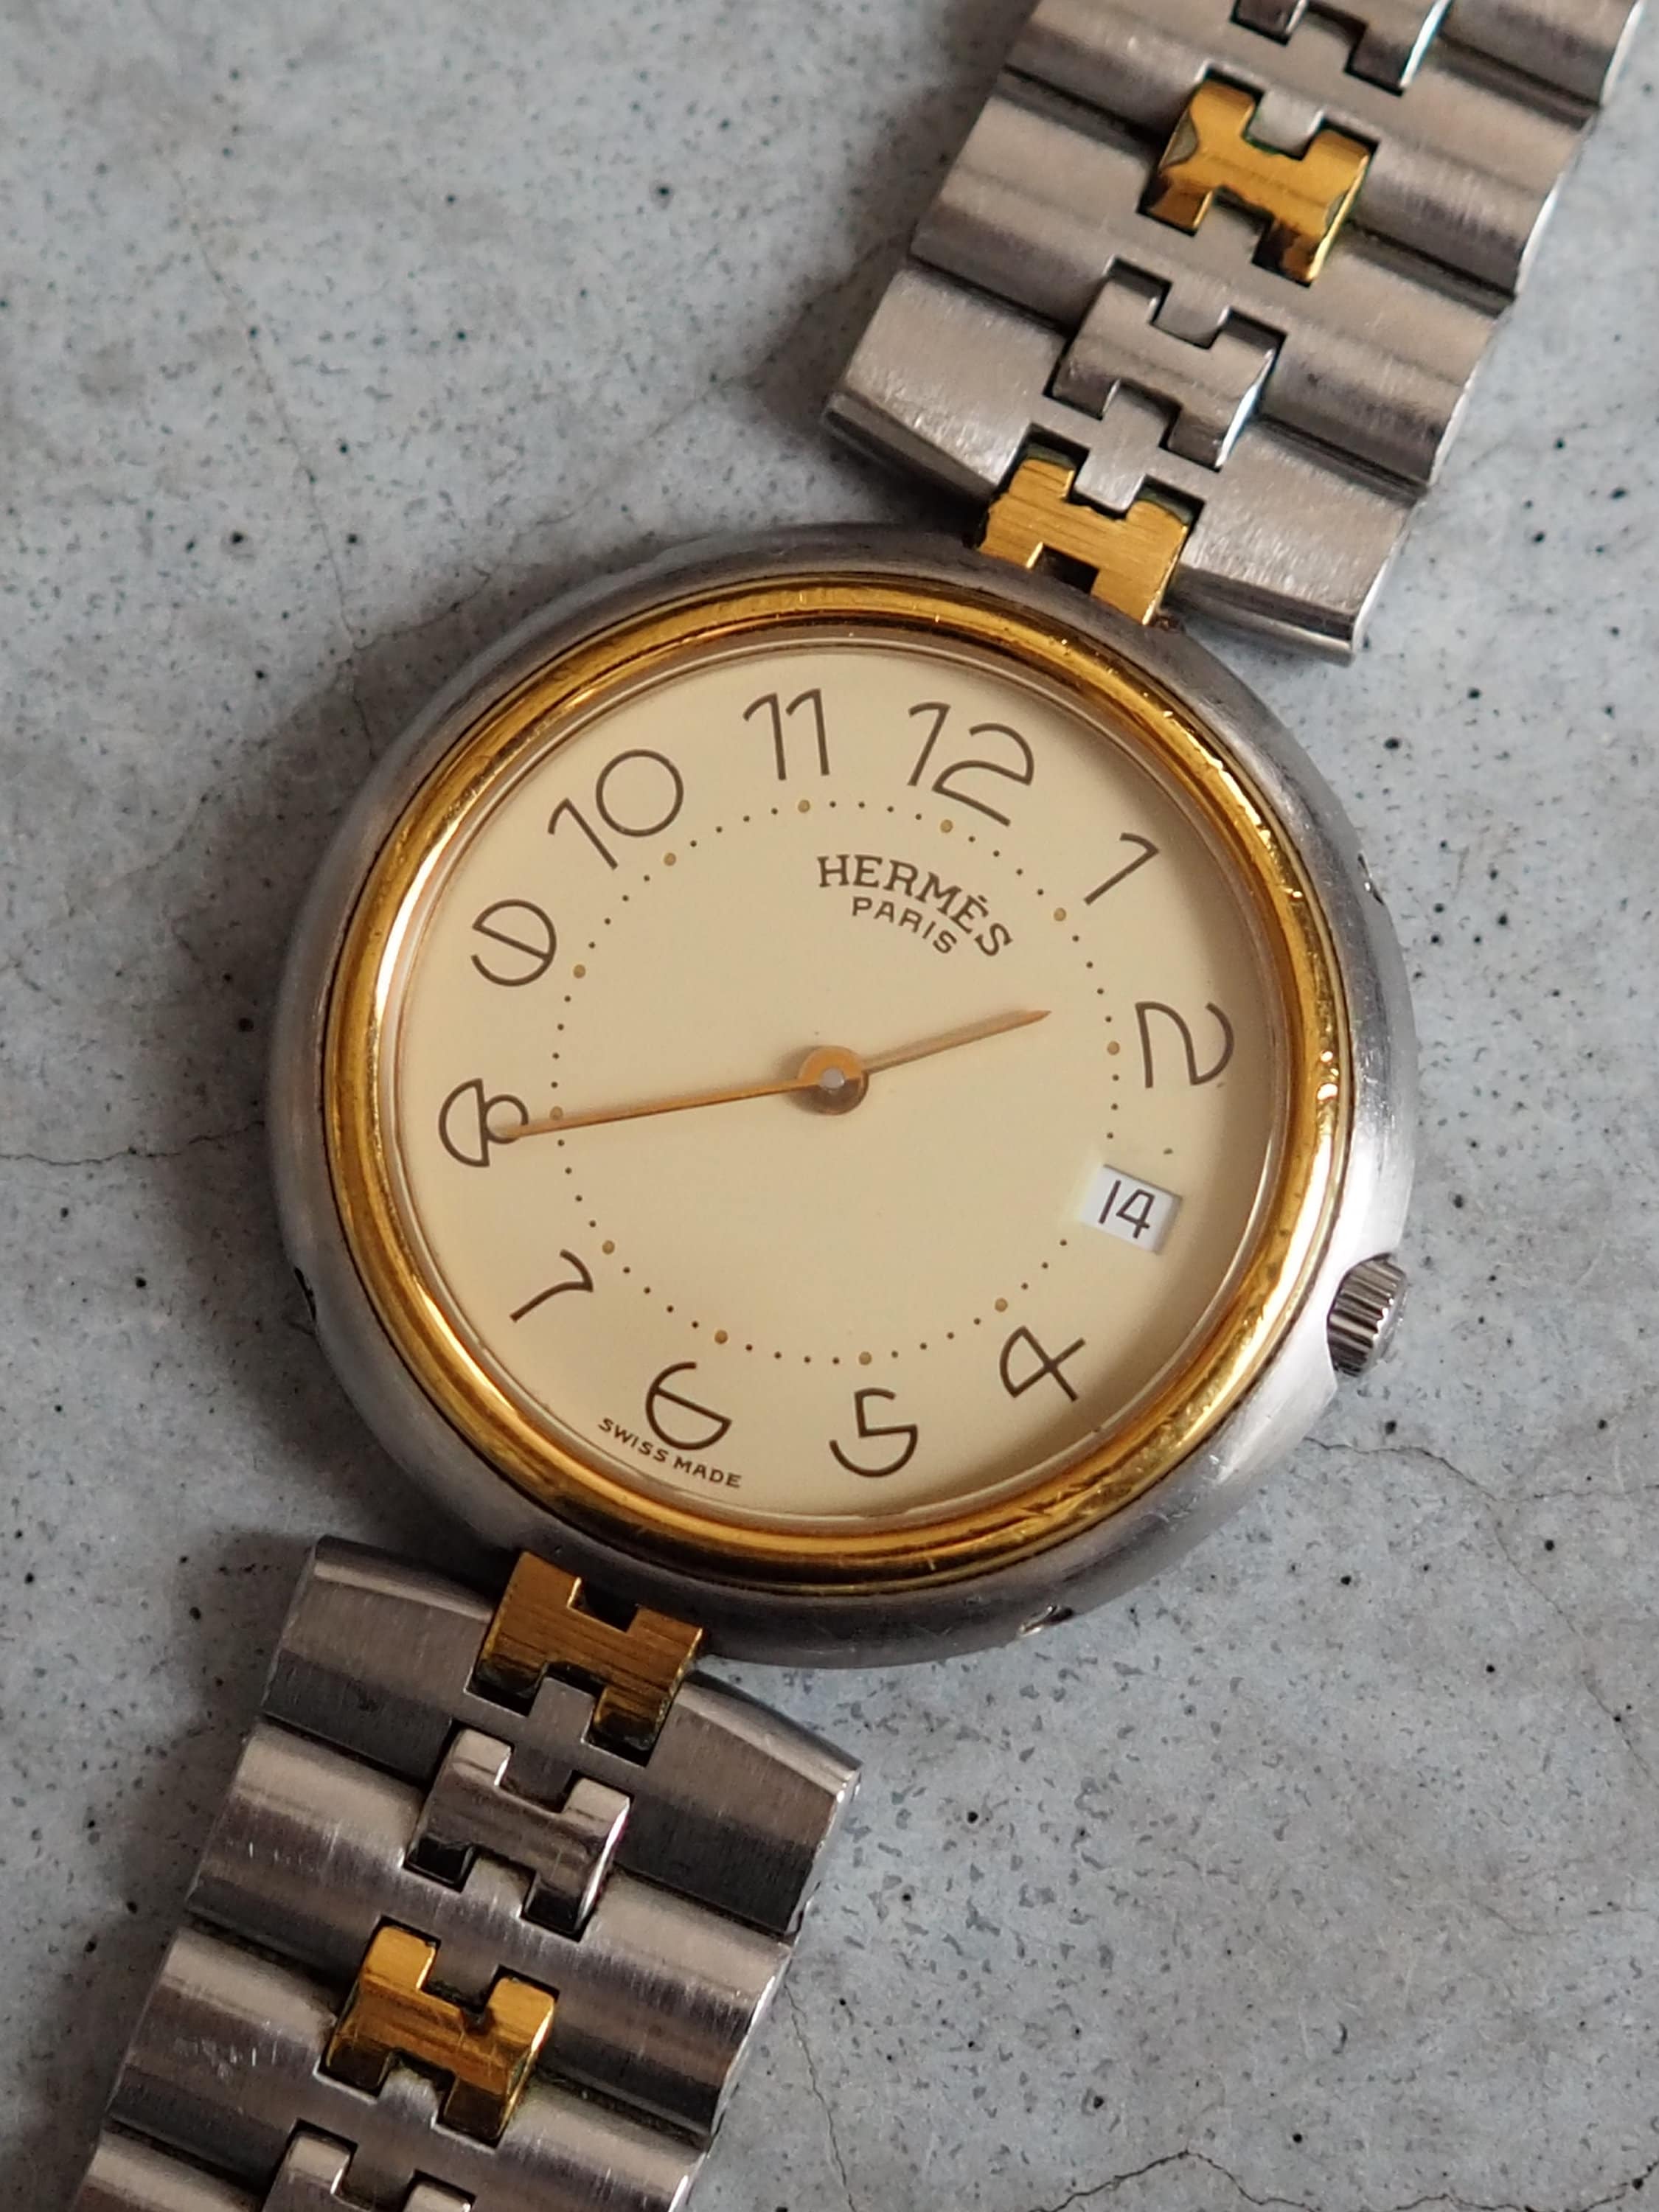 HERMES Profile Combi Date Wristwatch Watche Stainless Steel Unisex Silver Gold Quartz Vintage Authentic